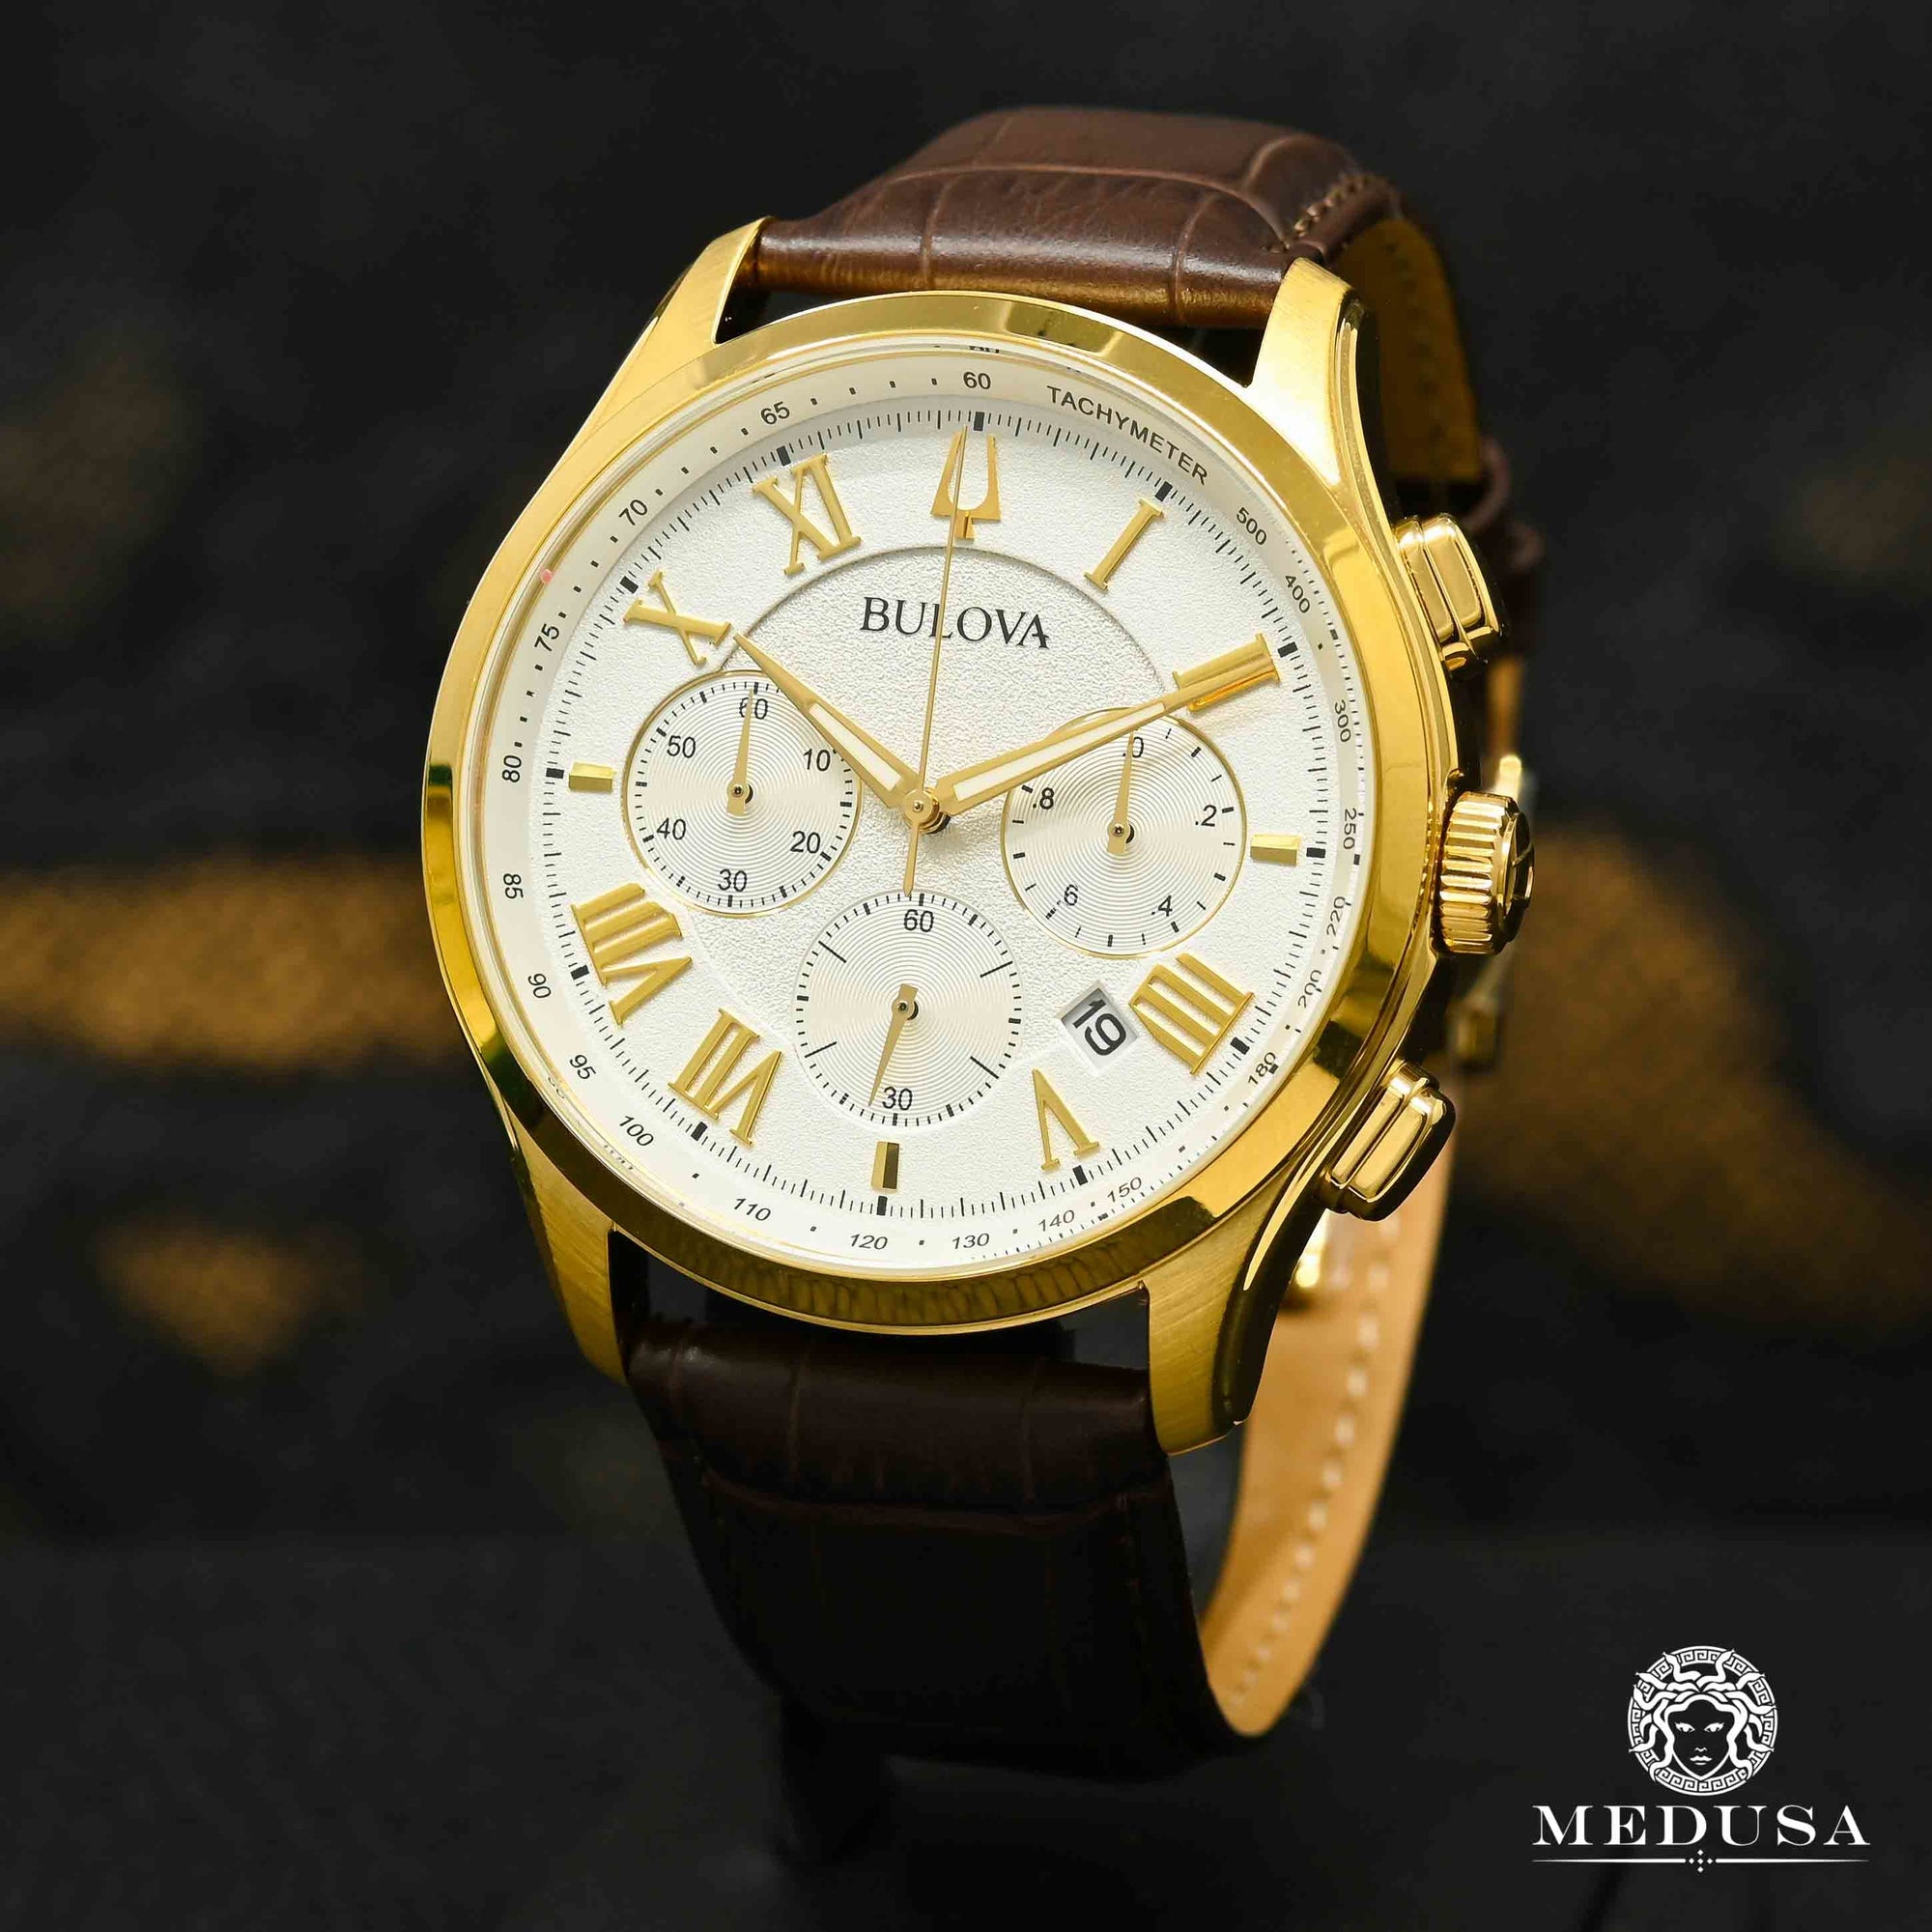 Bulova Watch | Bulova Classic Men's Watch - 97B169 Yellow Gold